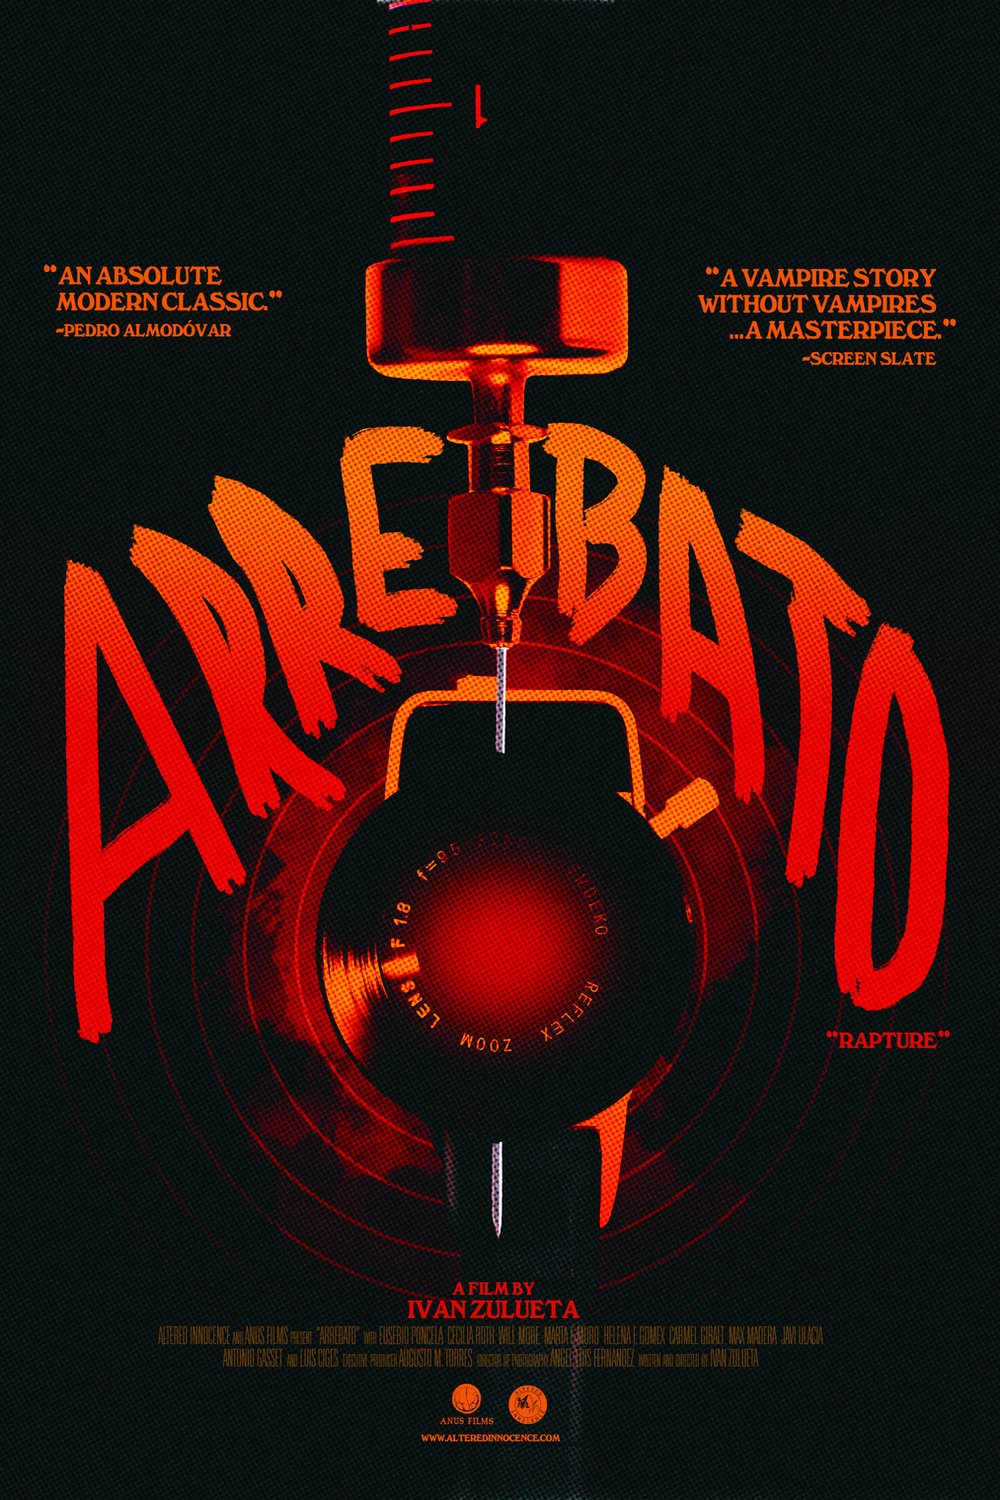 Spanish poster of the movie Arrebato